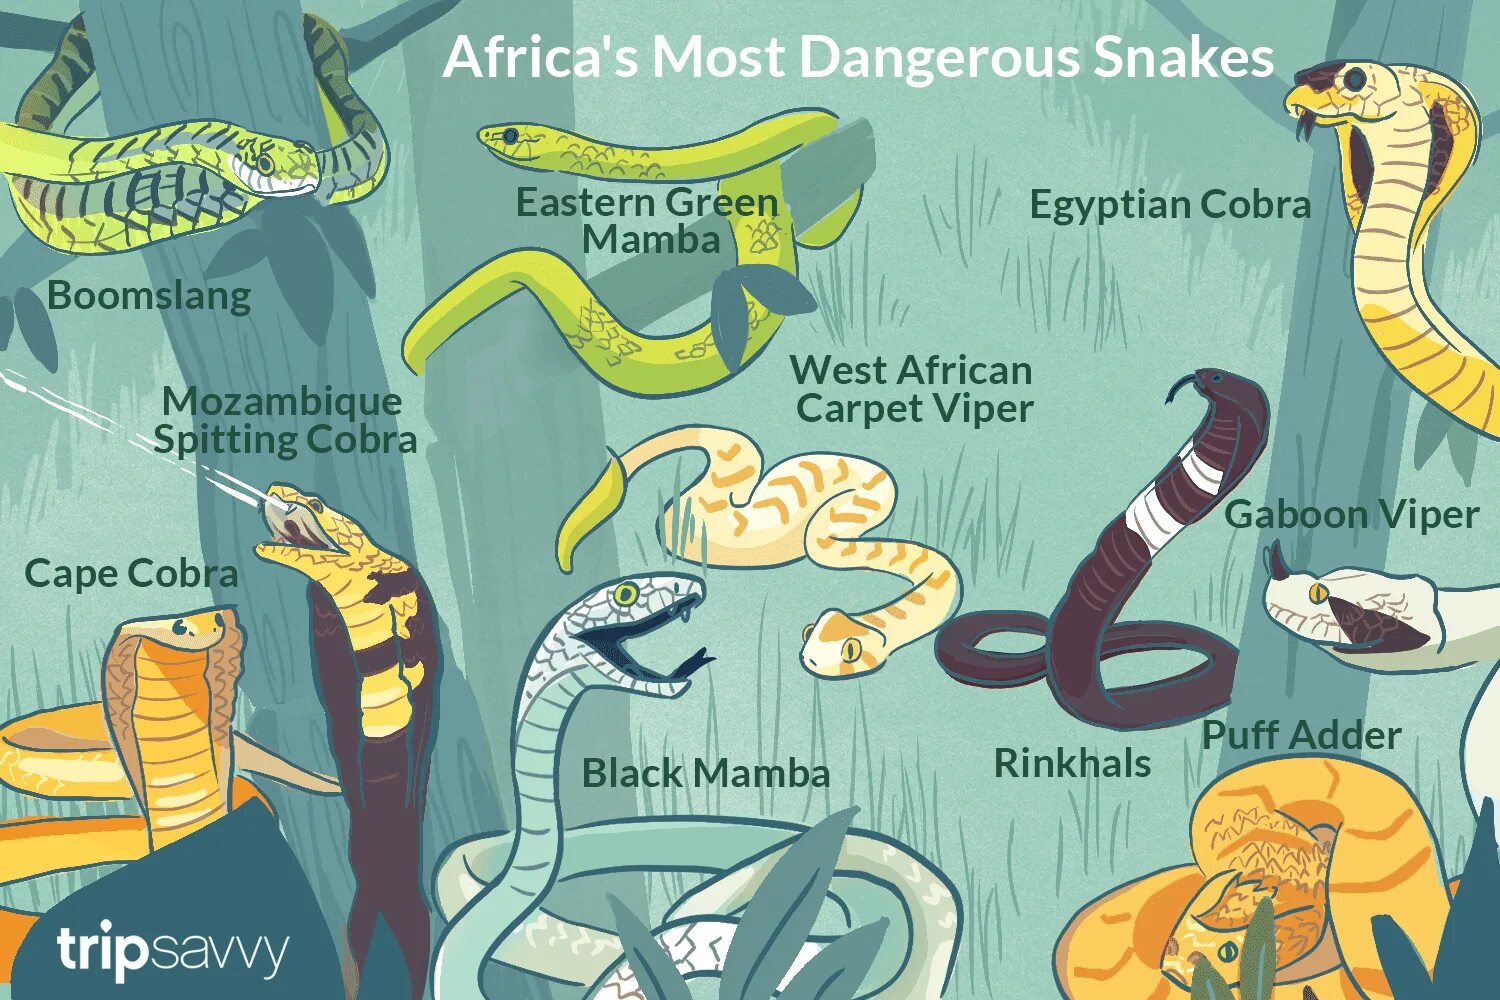 Африканские змеи ядовитые. Змеи Африки. Бумсланг ядовитая змея. Виды змей в Африке. She is snake